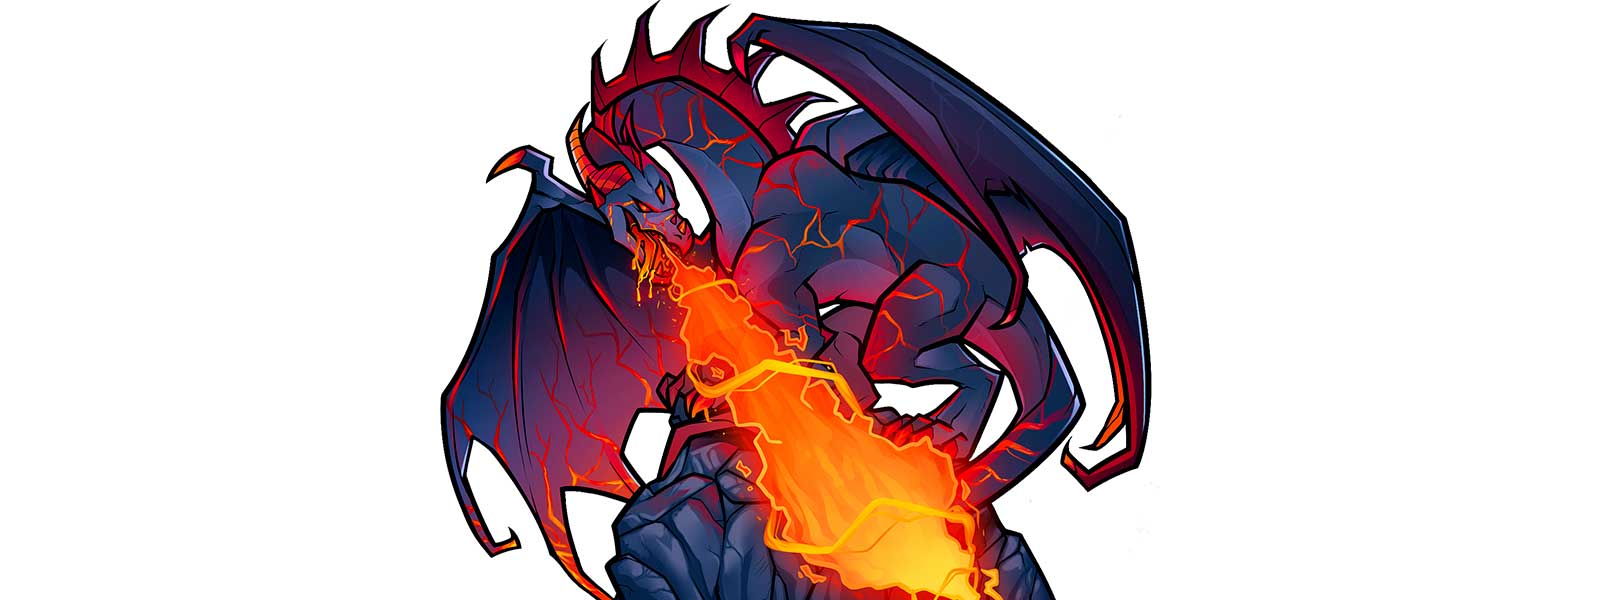 Comment dessiner un dragon qui crache du feu